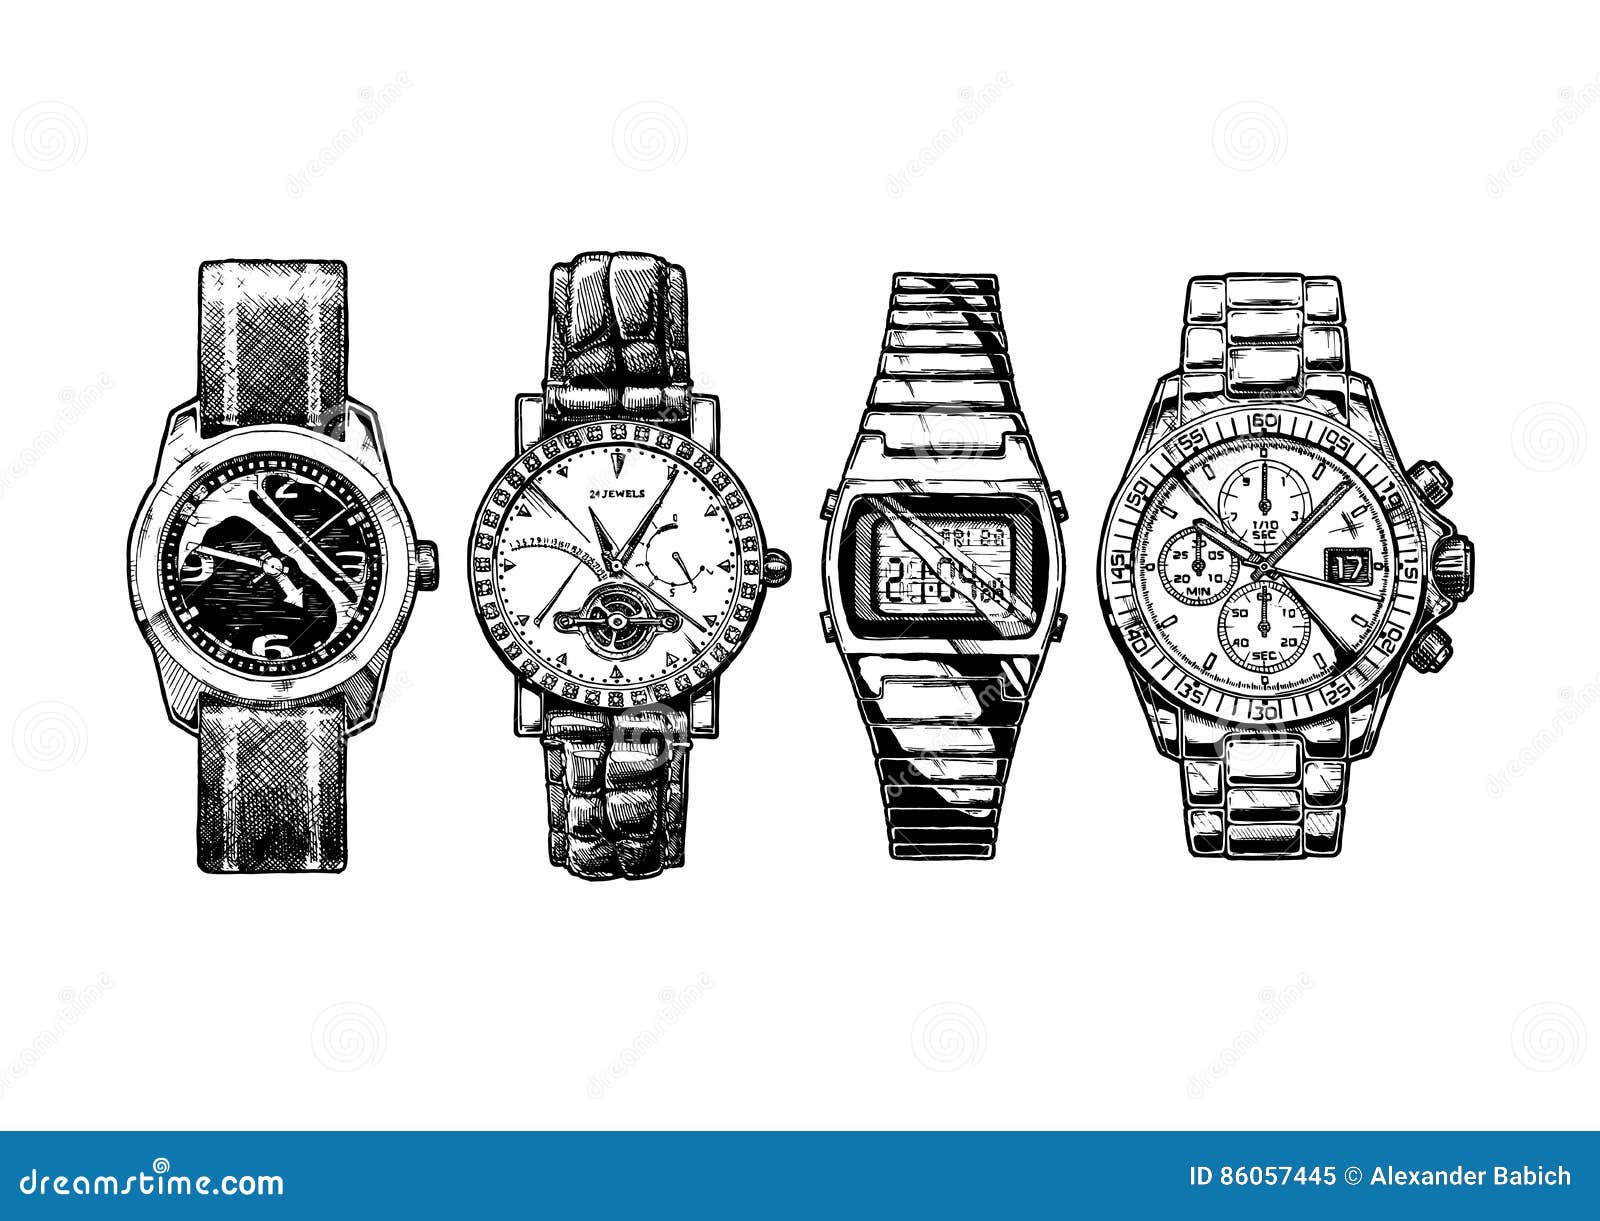 https://thumbs.dreamstime.com/z/set-men-s-wristwatches-vector-hand-drown-illustration-mechanical-digital-wrist-watches-watch-diamonds-tourbillon-86057445.jpg